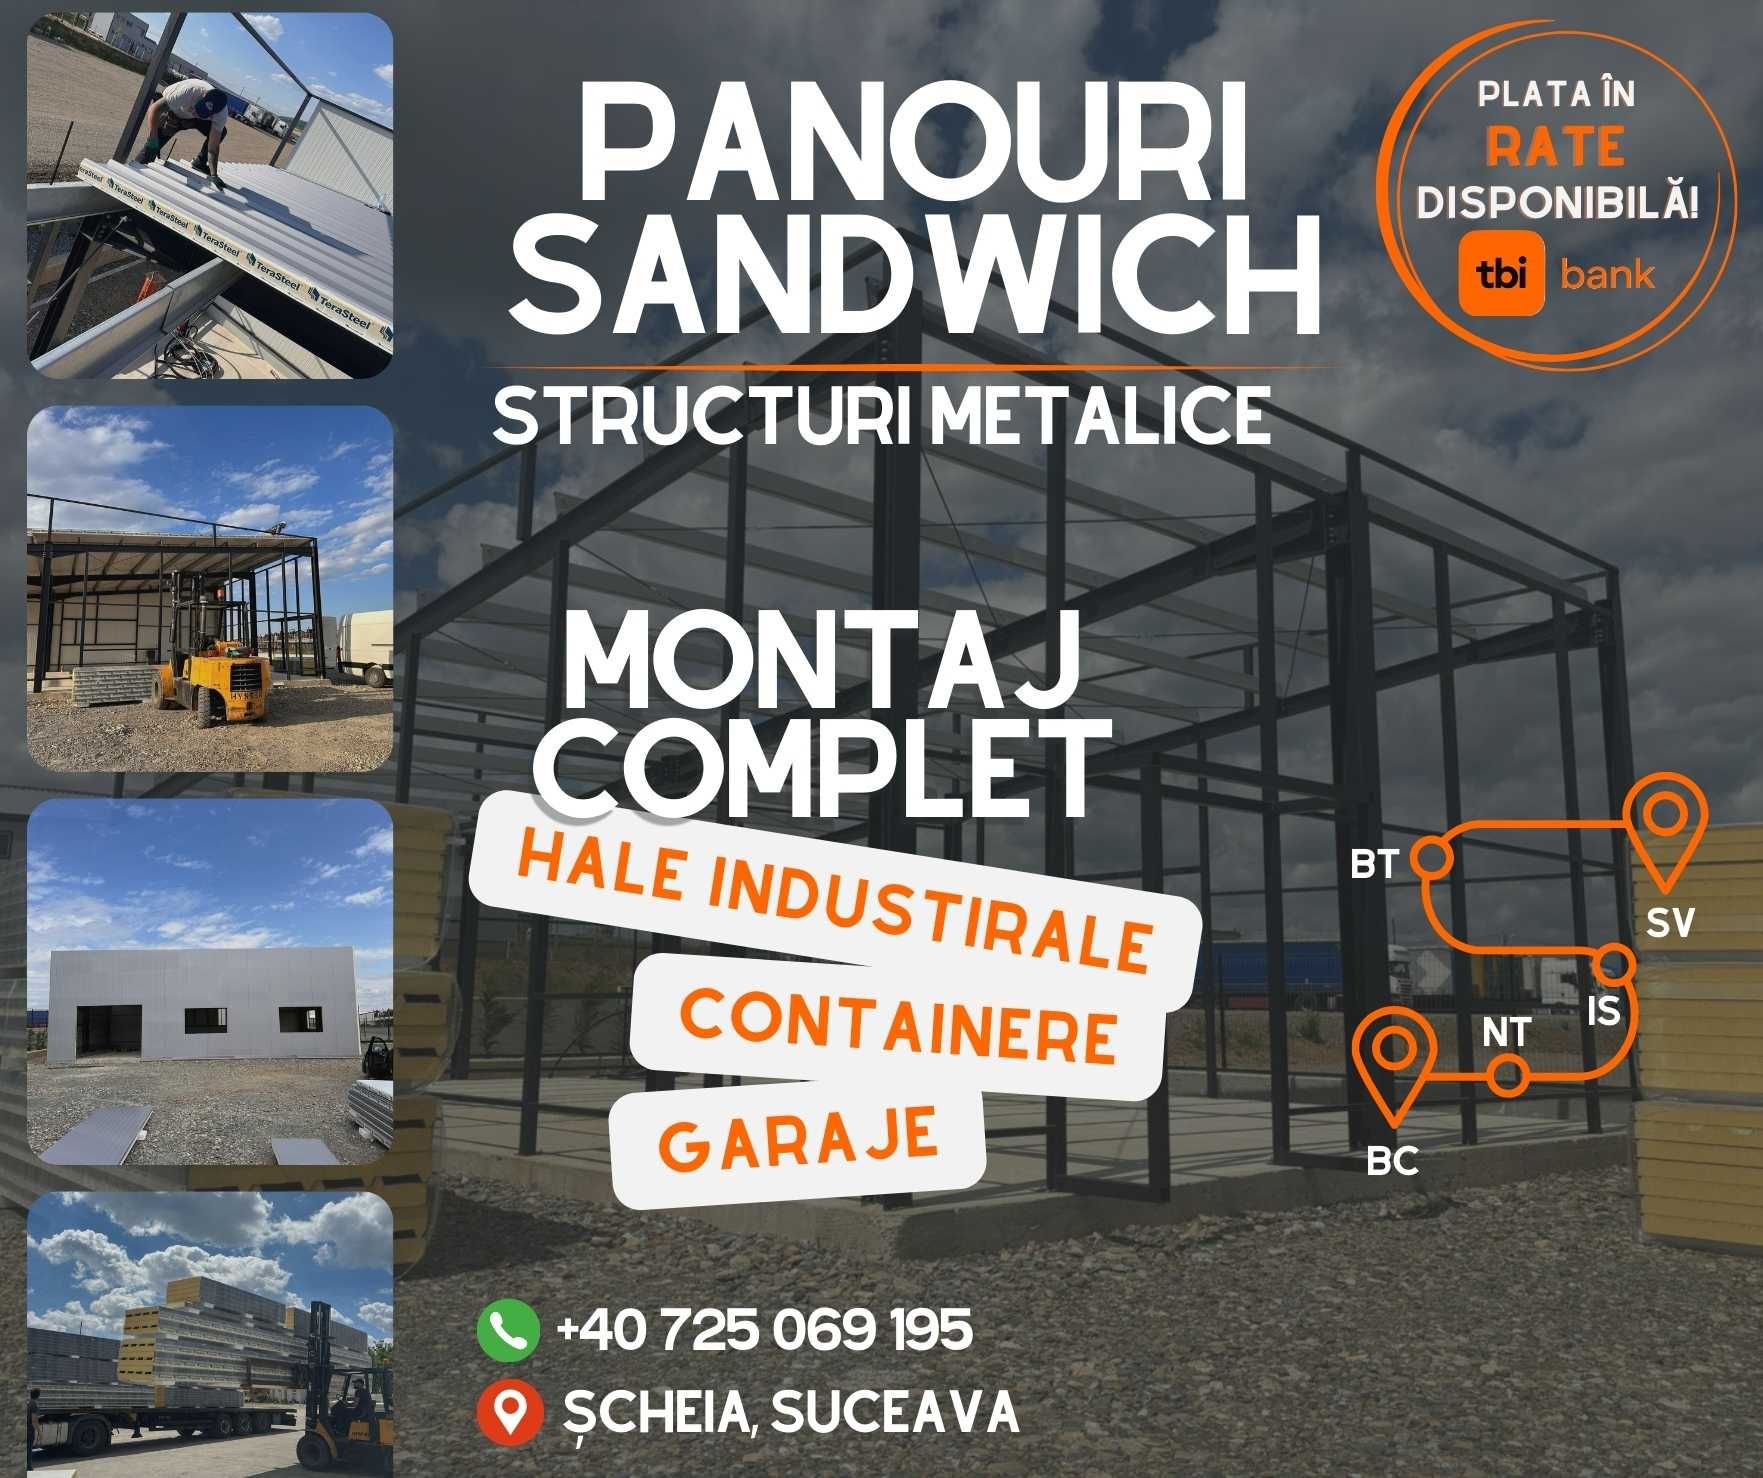 Panouri Sandwich - Plata in rate